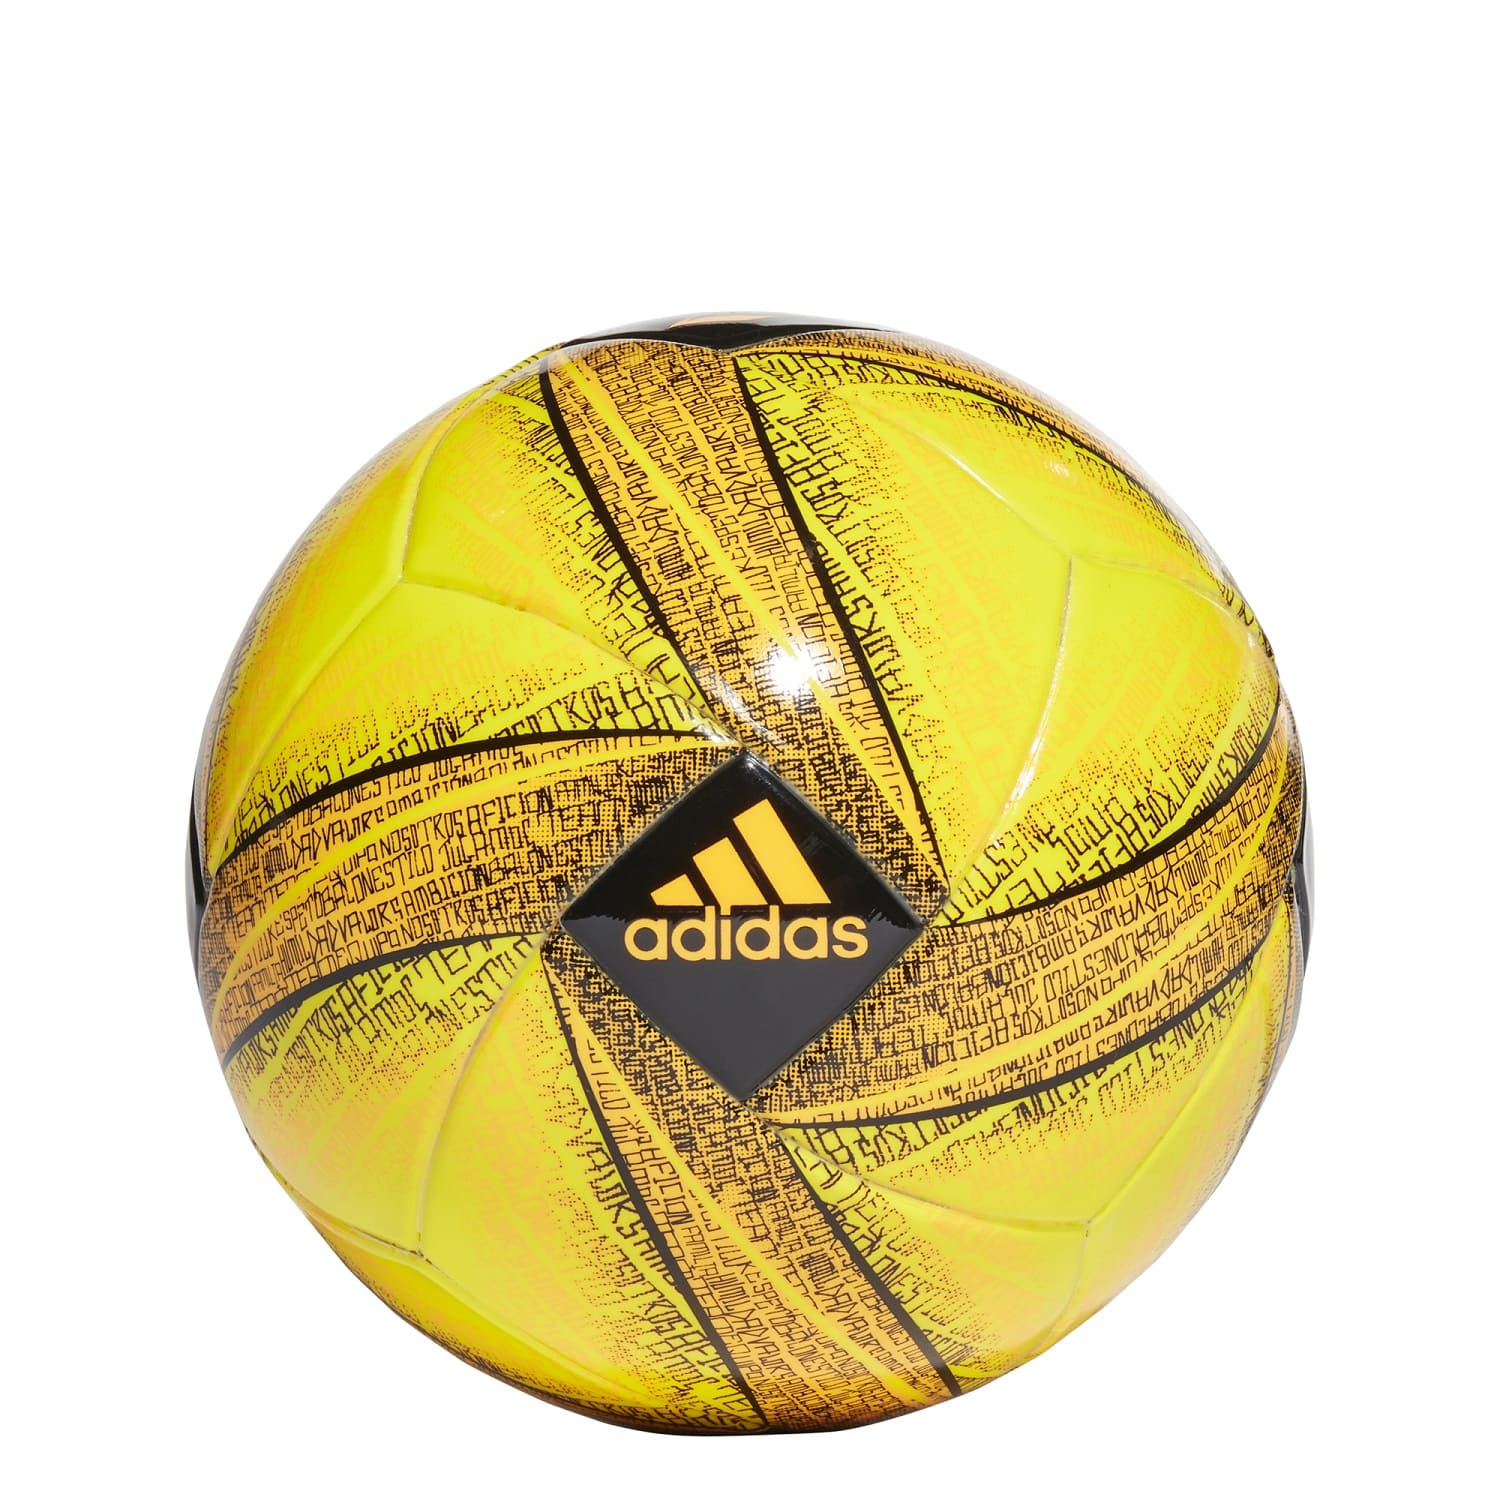 ADIDAS MESSI MINI FUSSBALL Solar Gold/Bright Yellow/Black